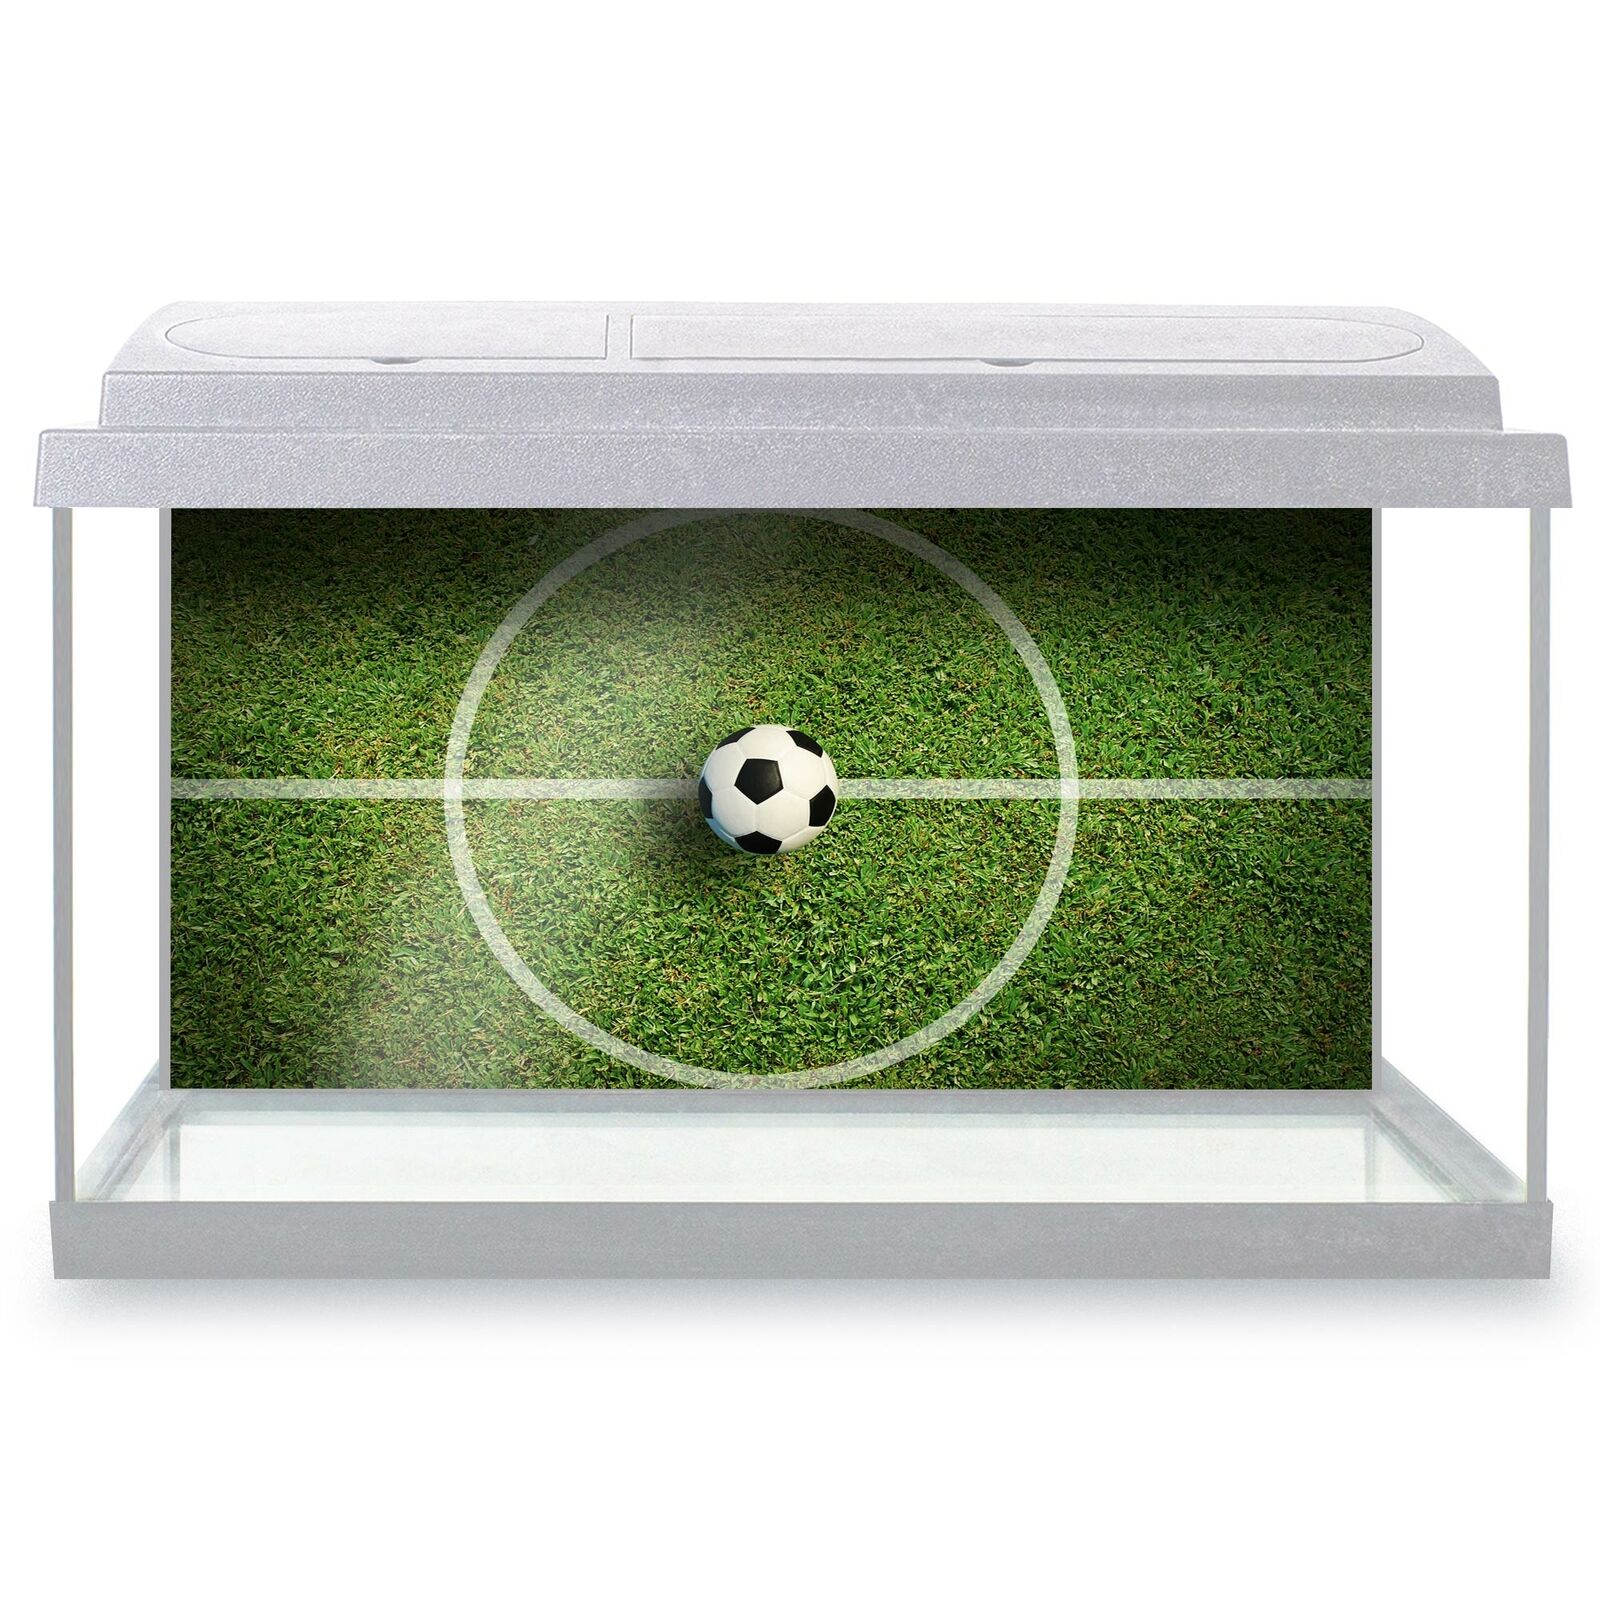 Fish Tank Background 90x45cm - Football Pitch Soccer Ball Sports Game #8681  | eBay